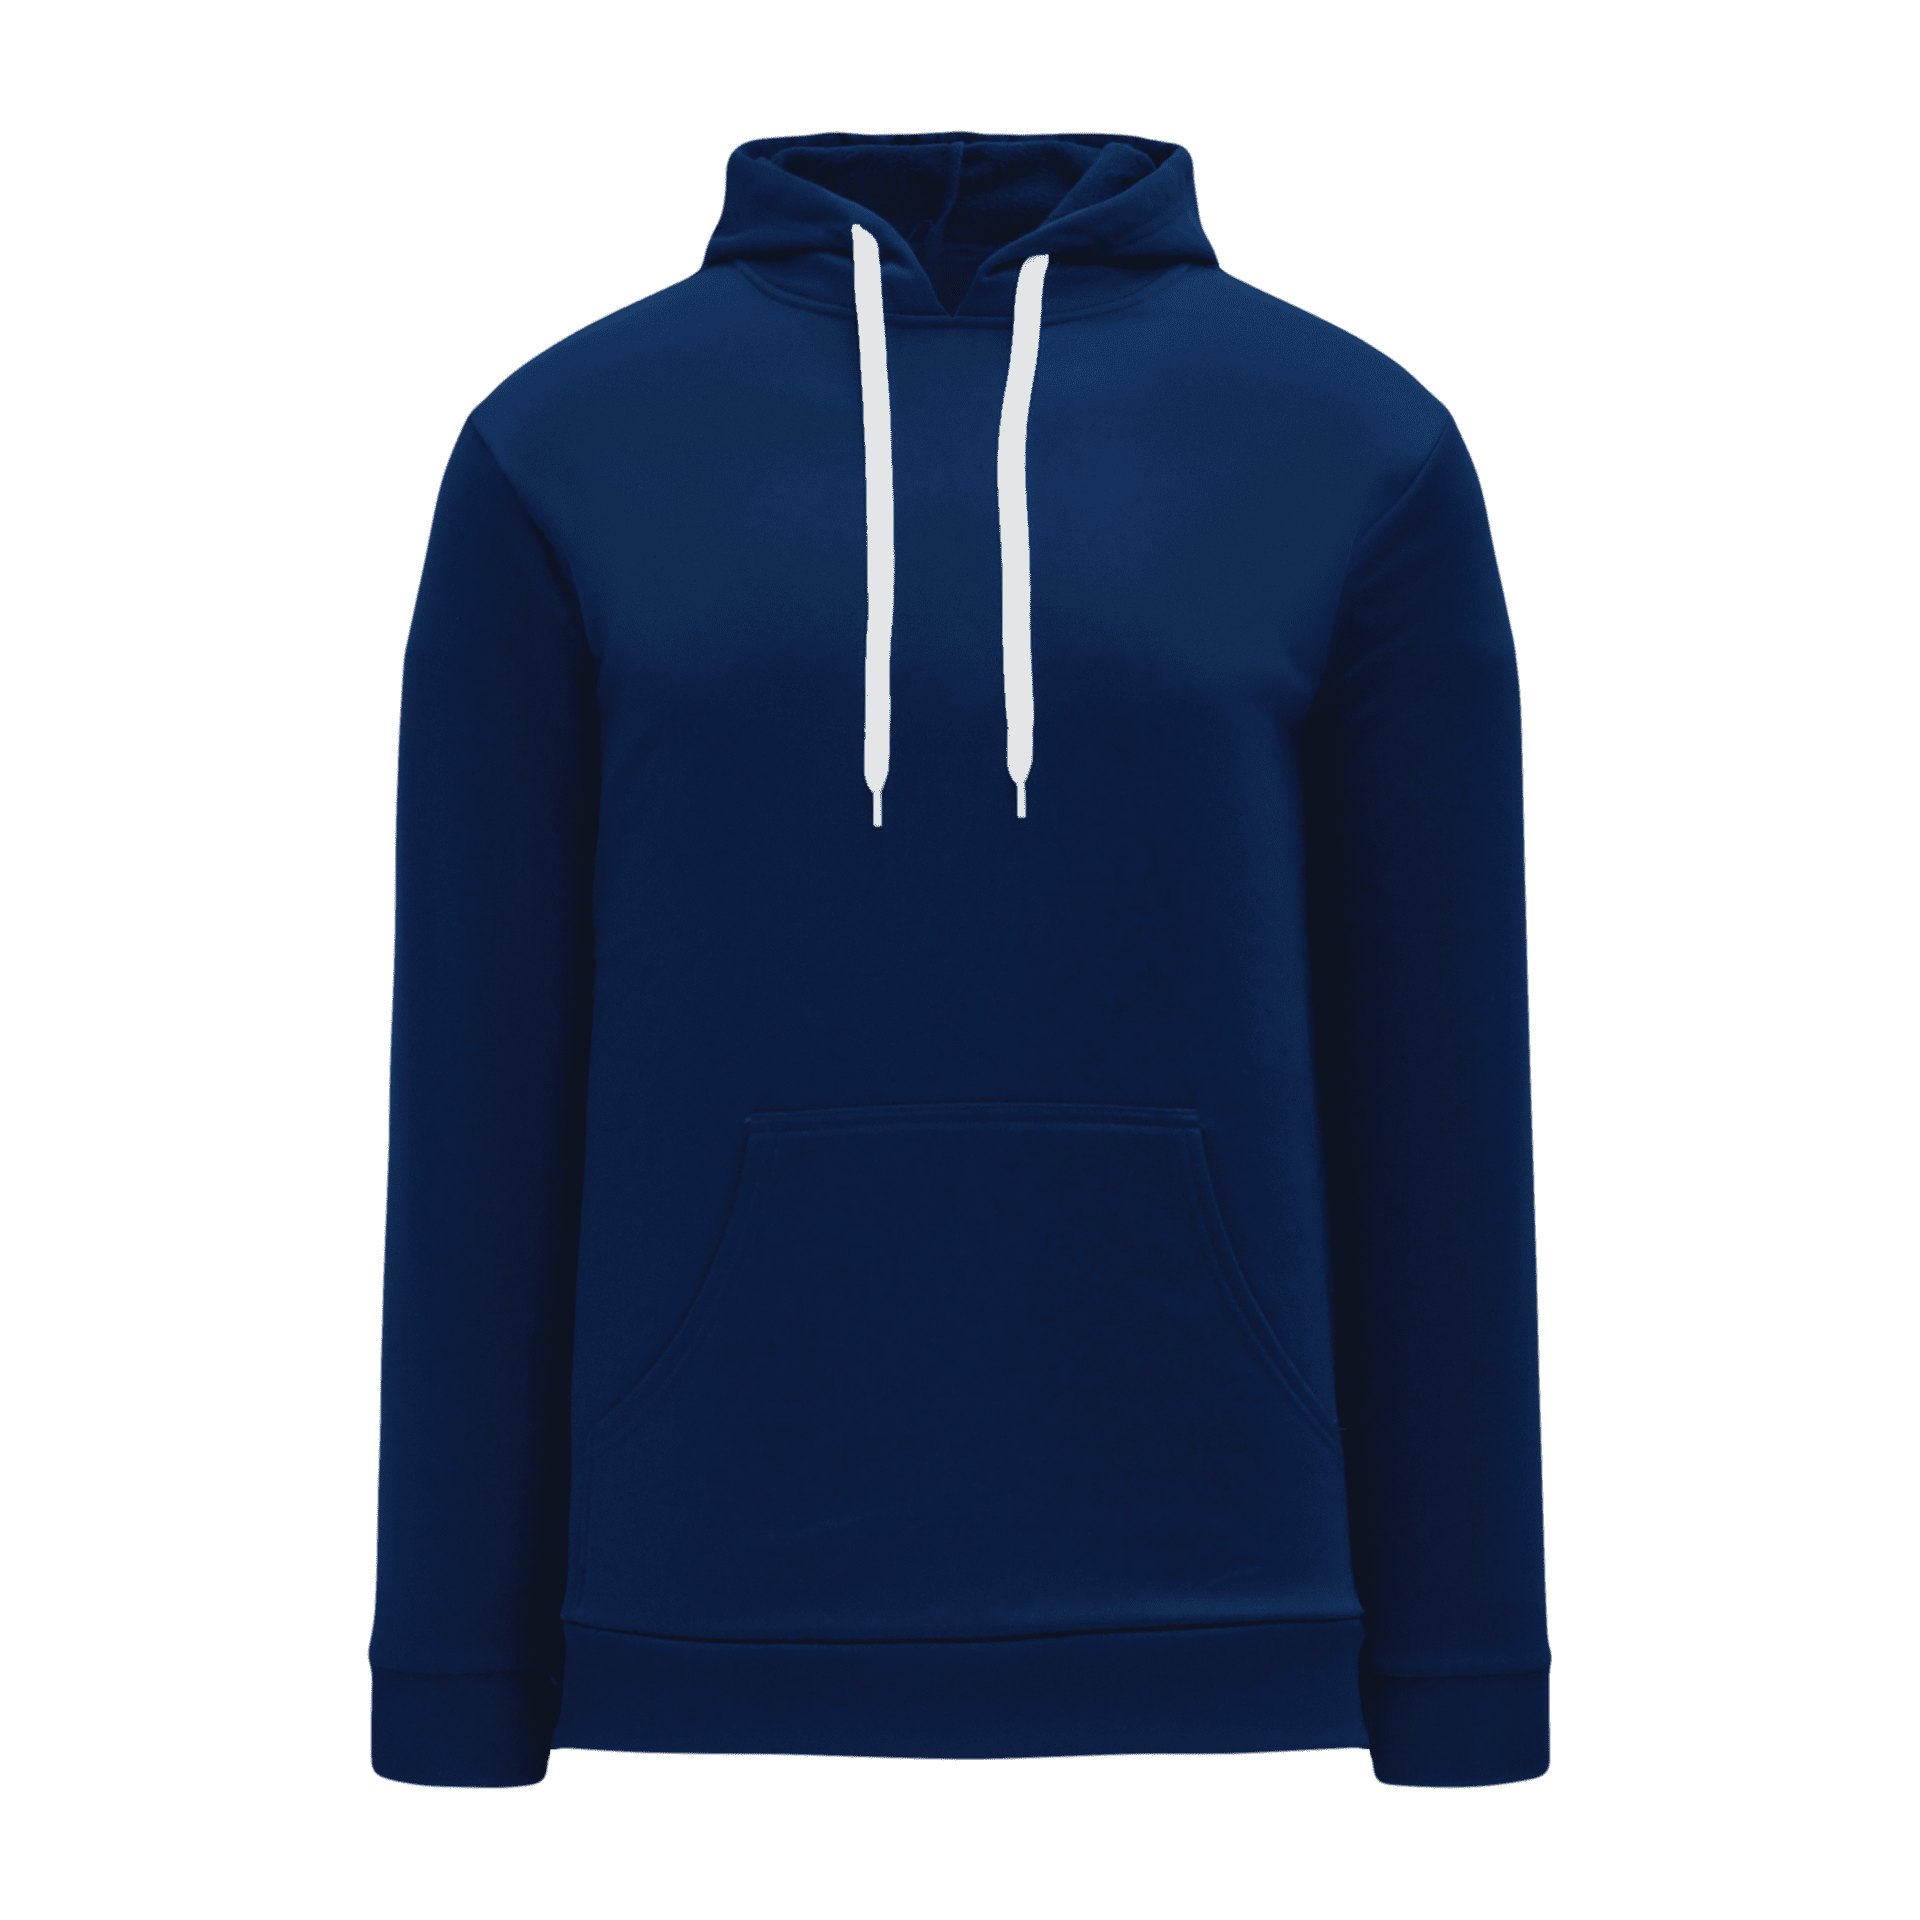 ATHLETIC KNIT Polyfleece Hooded Sweatshirt #A1835 Navy